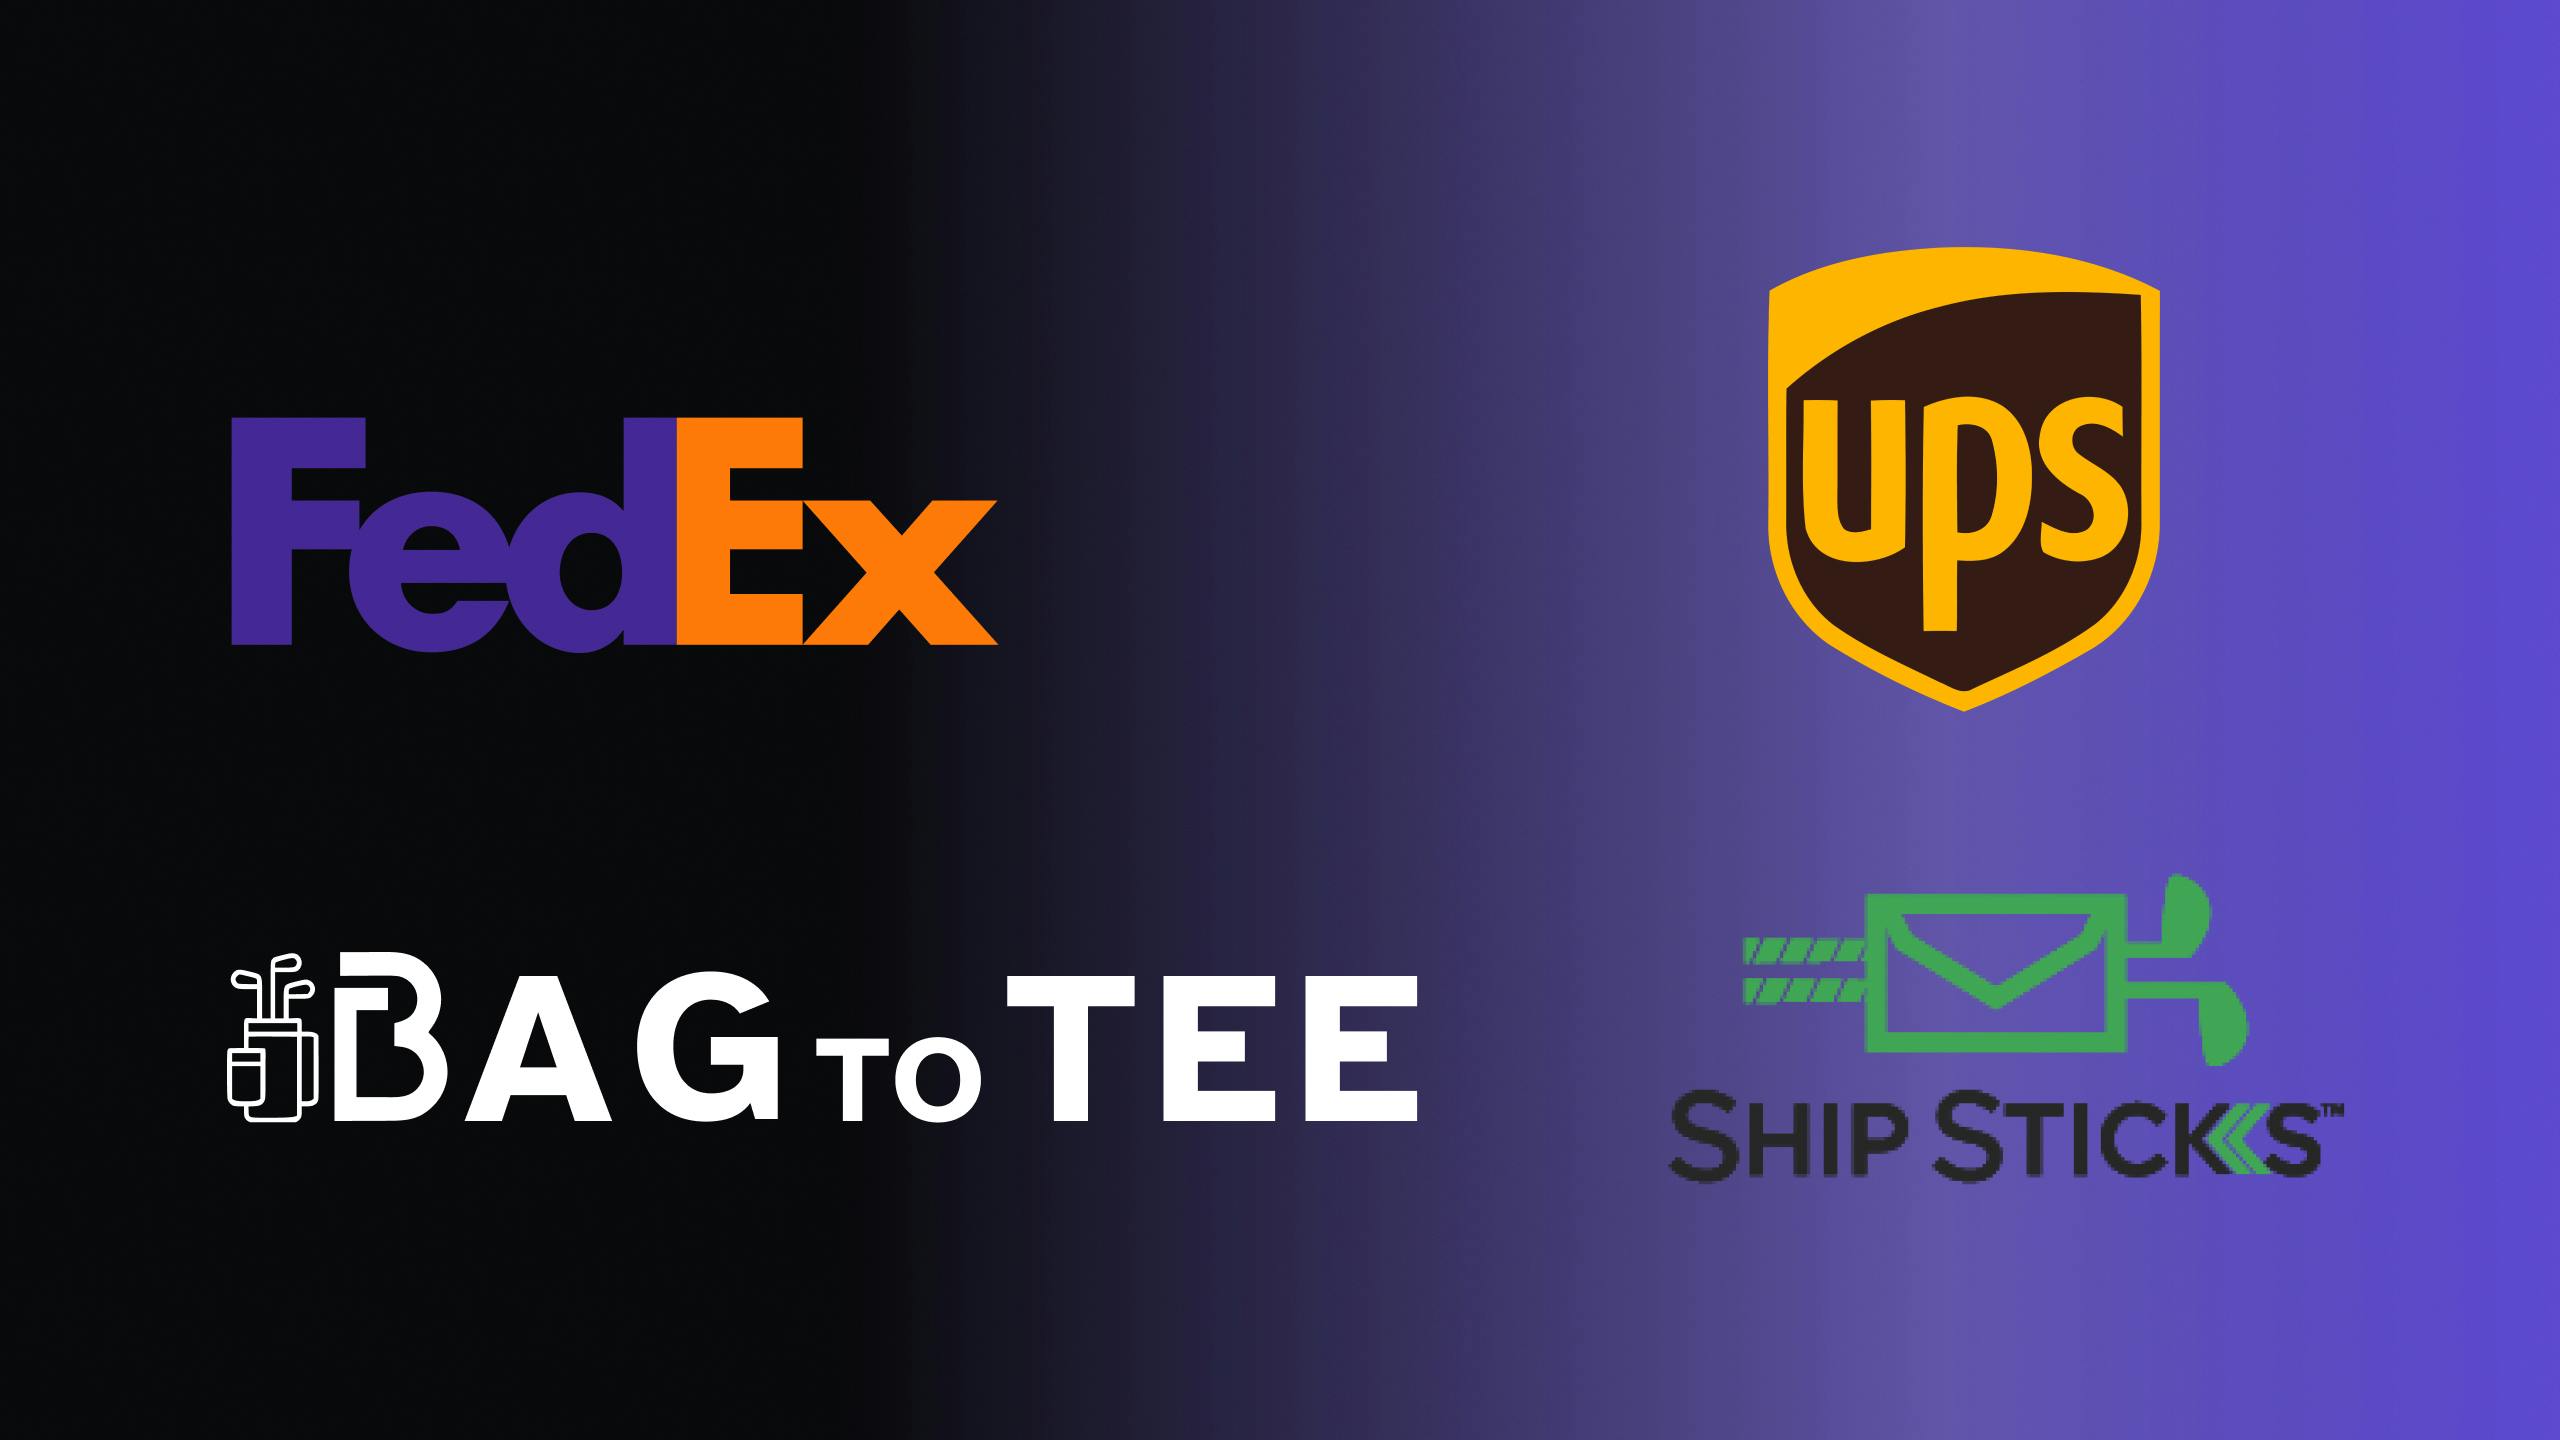 Banner Image of UPS, FedEx, ShipSticks and BagToTee Logo